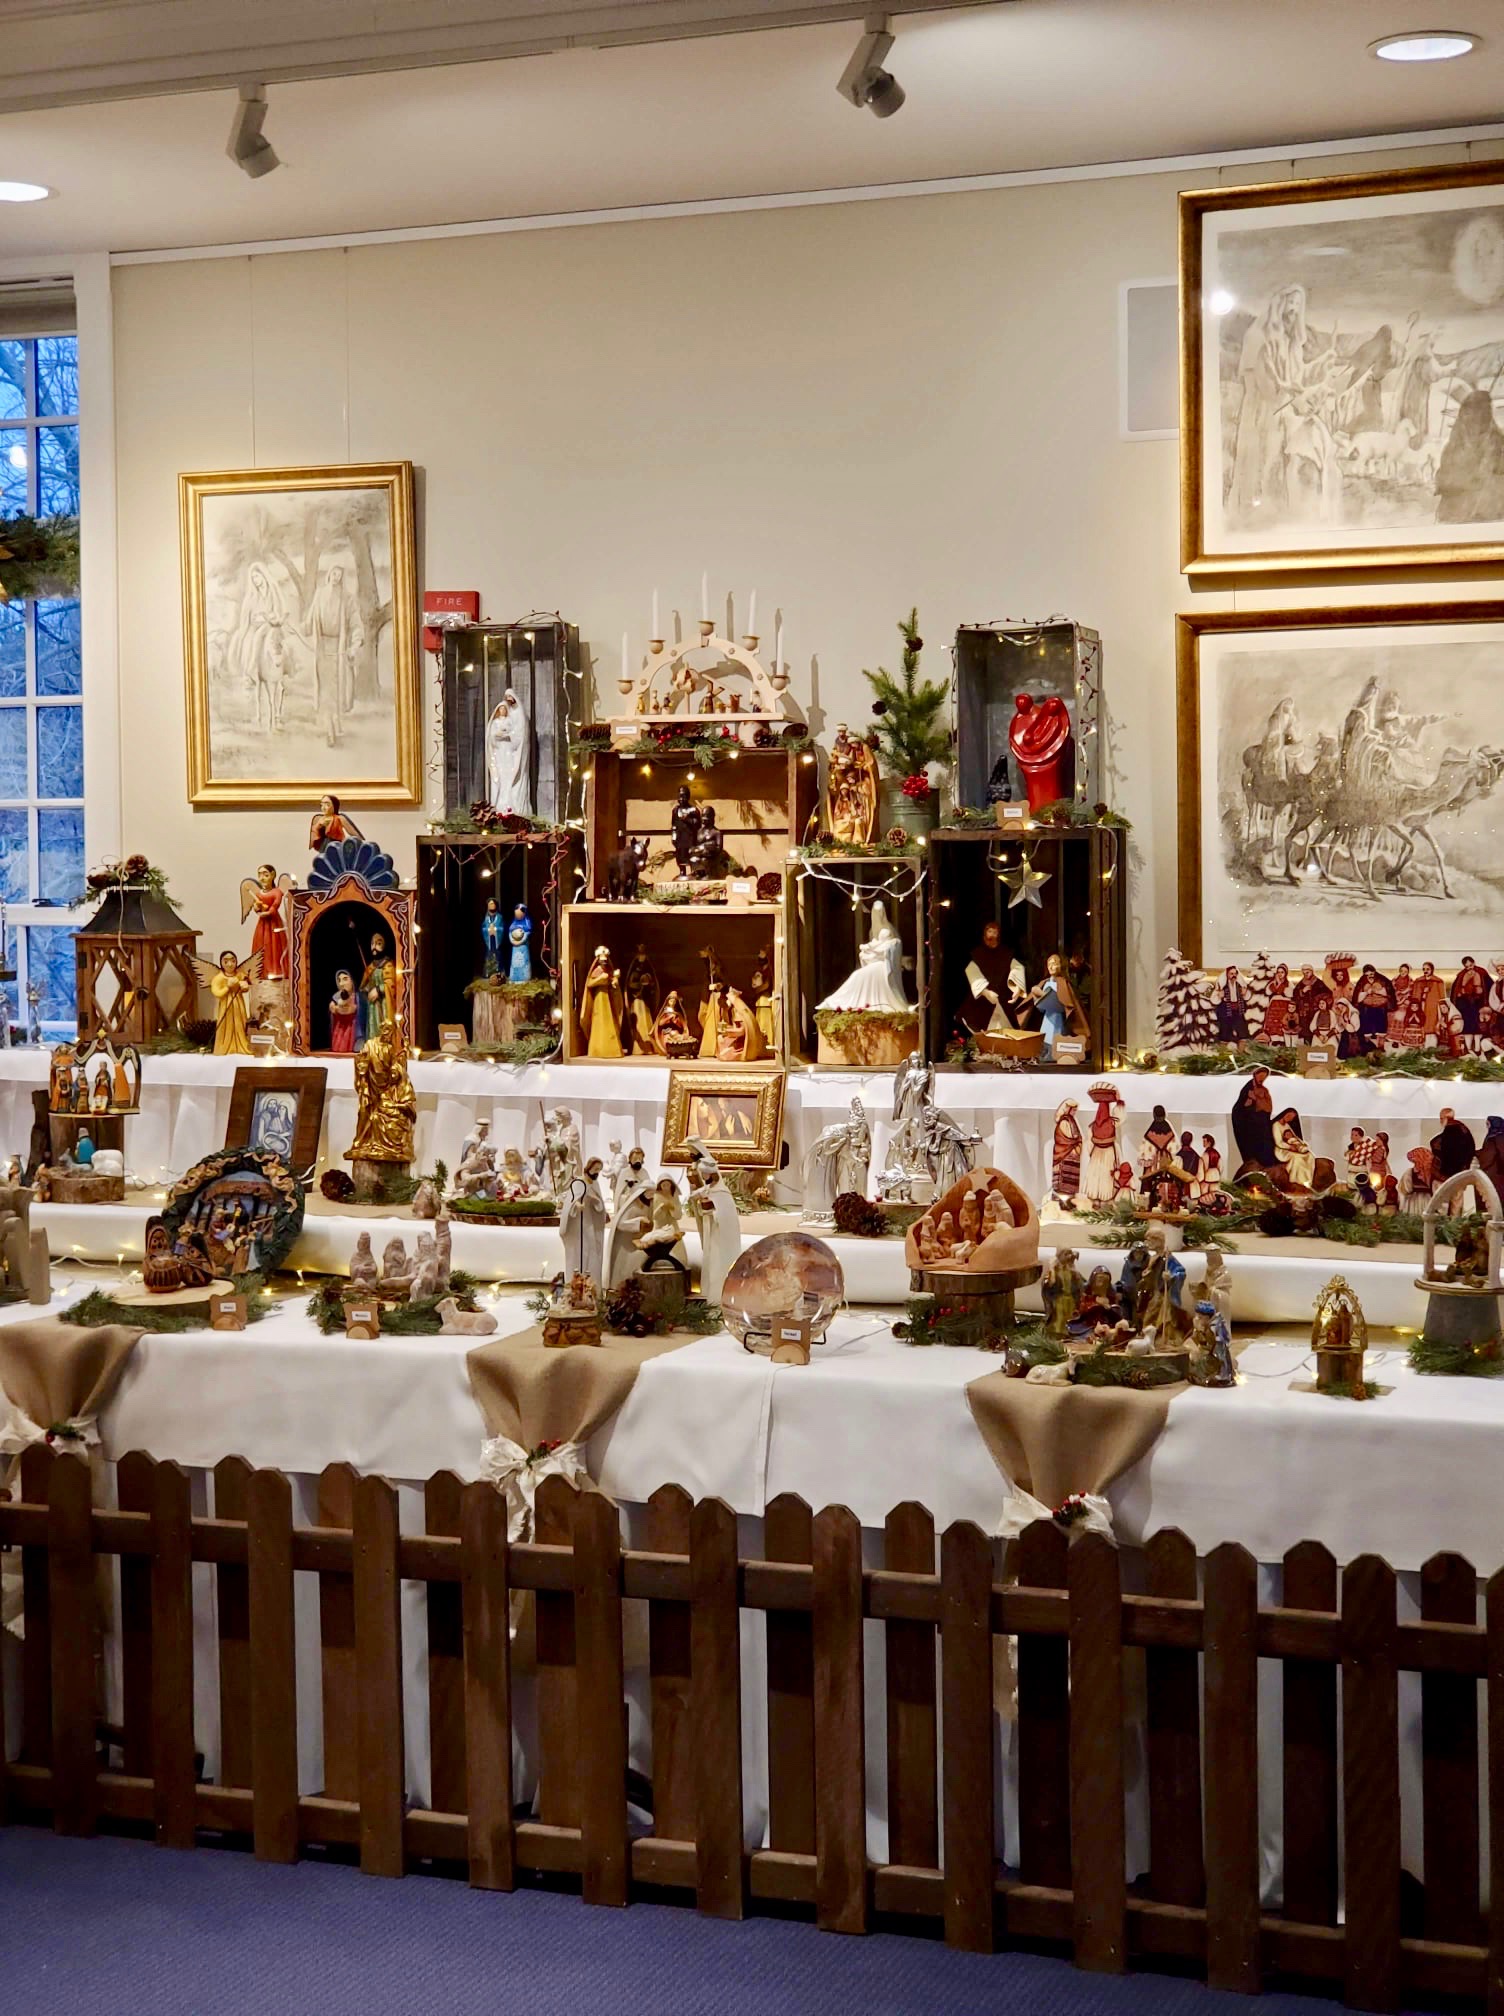 Kirtland Nativity Scenes